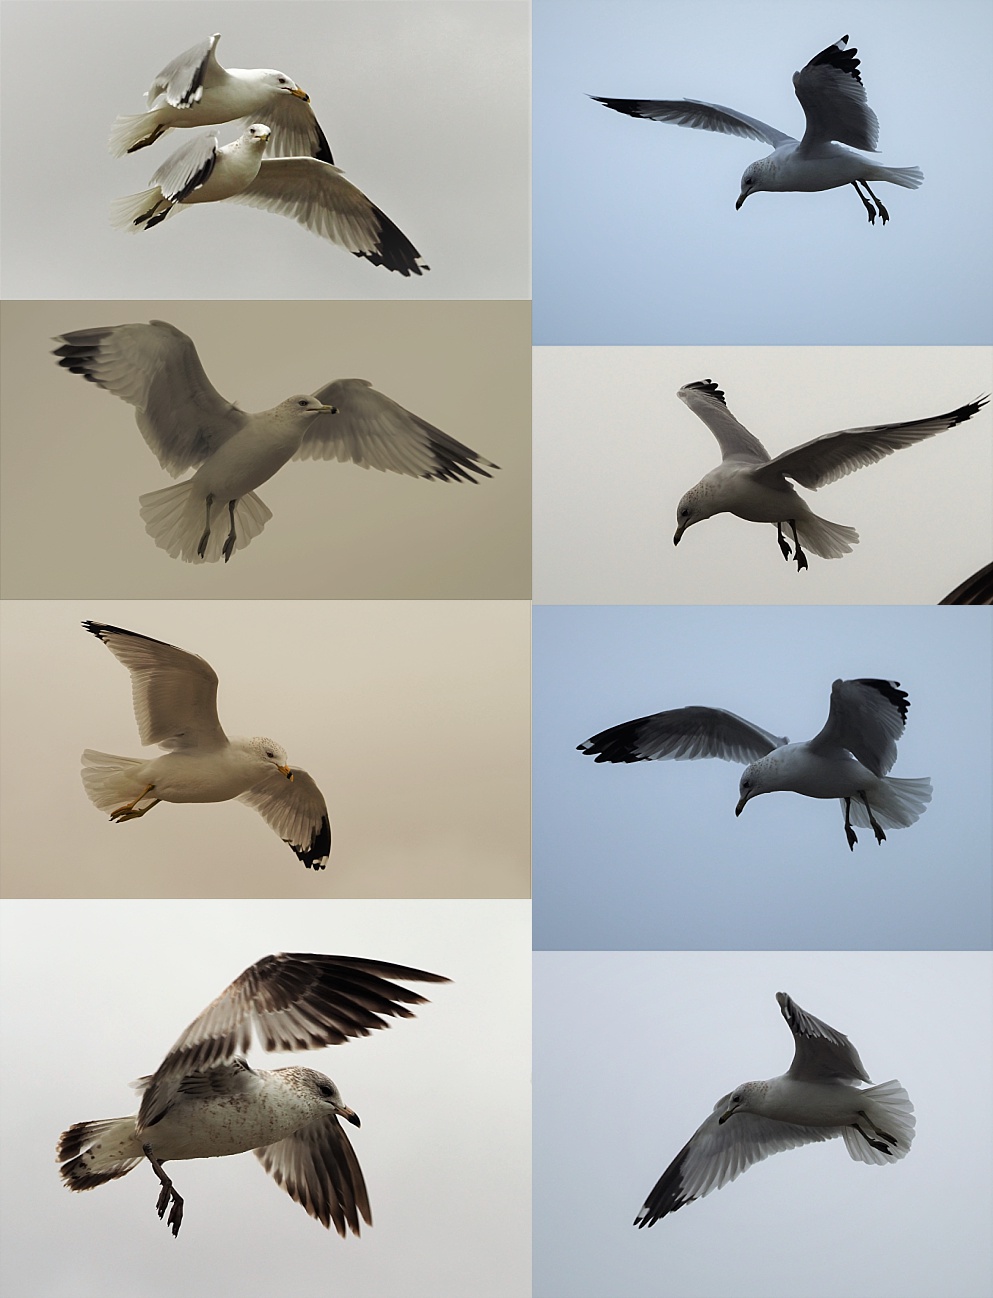 8-photo vollage of gulls aloft